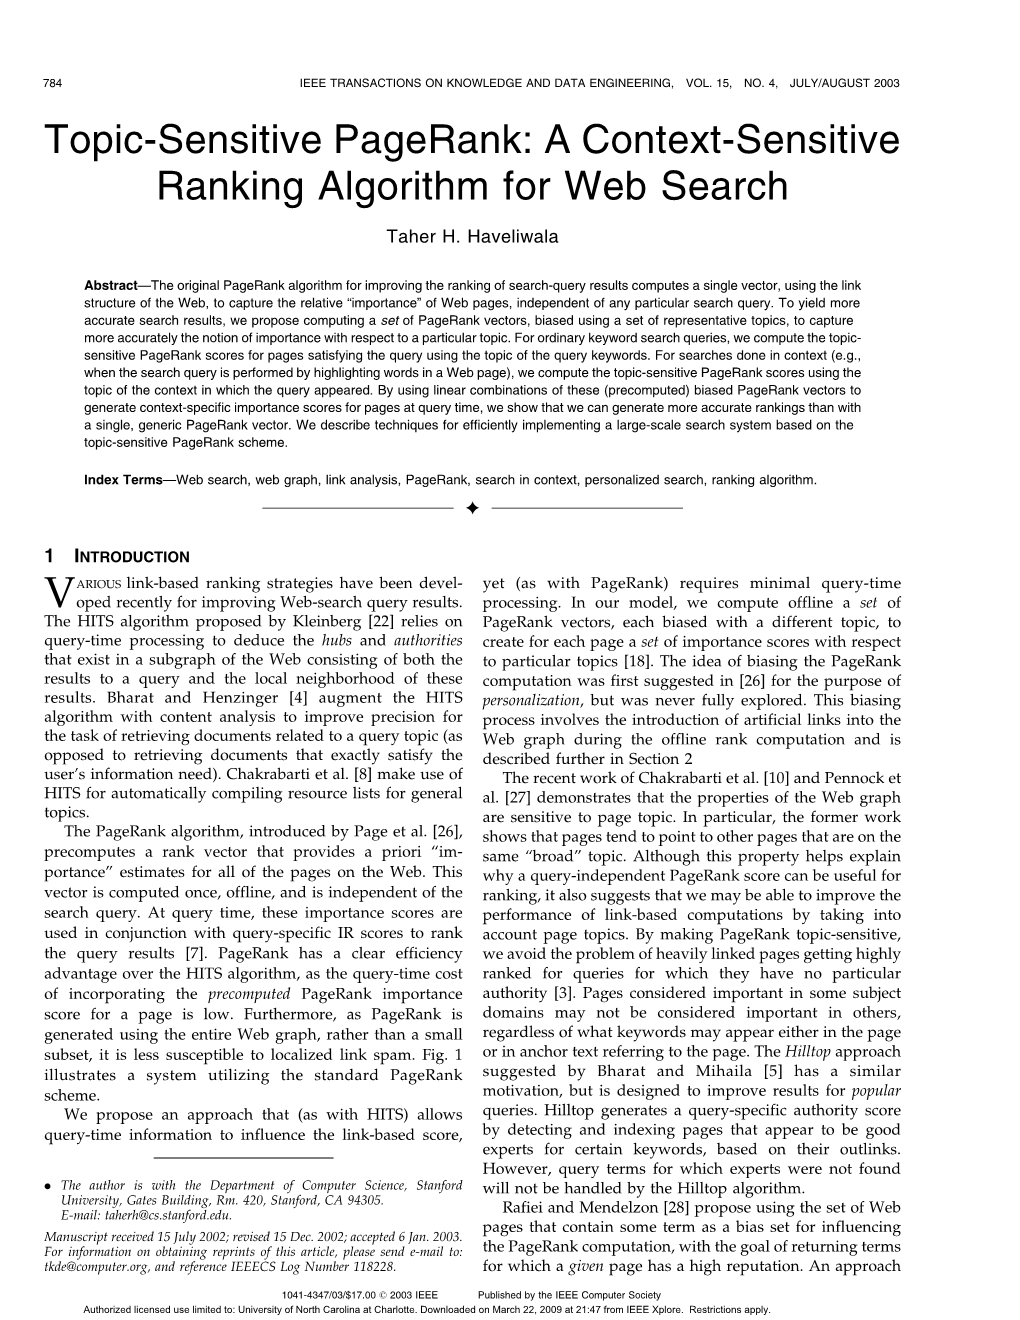 A Context-Sensitive Ranking Algorithm for Web Search